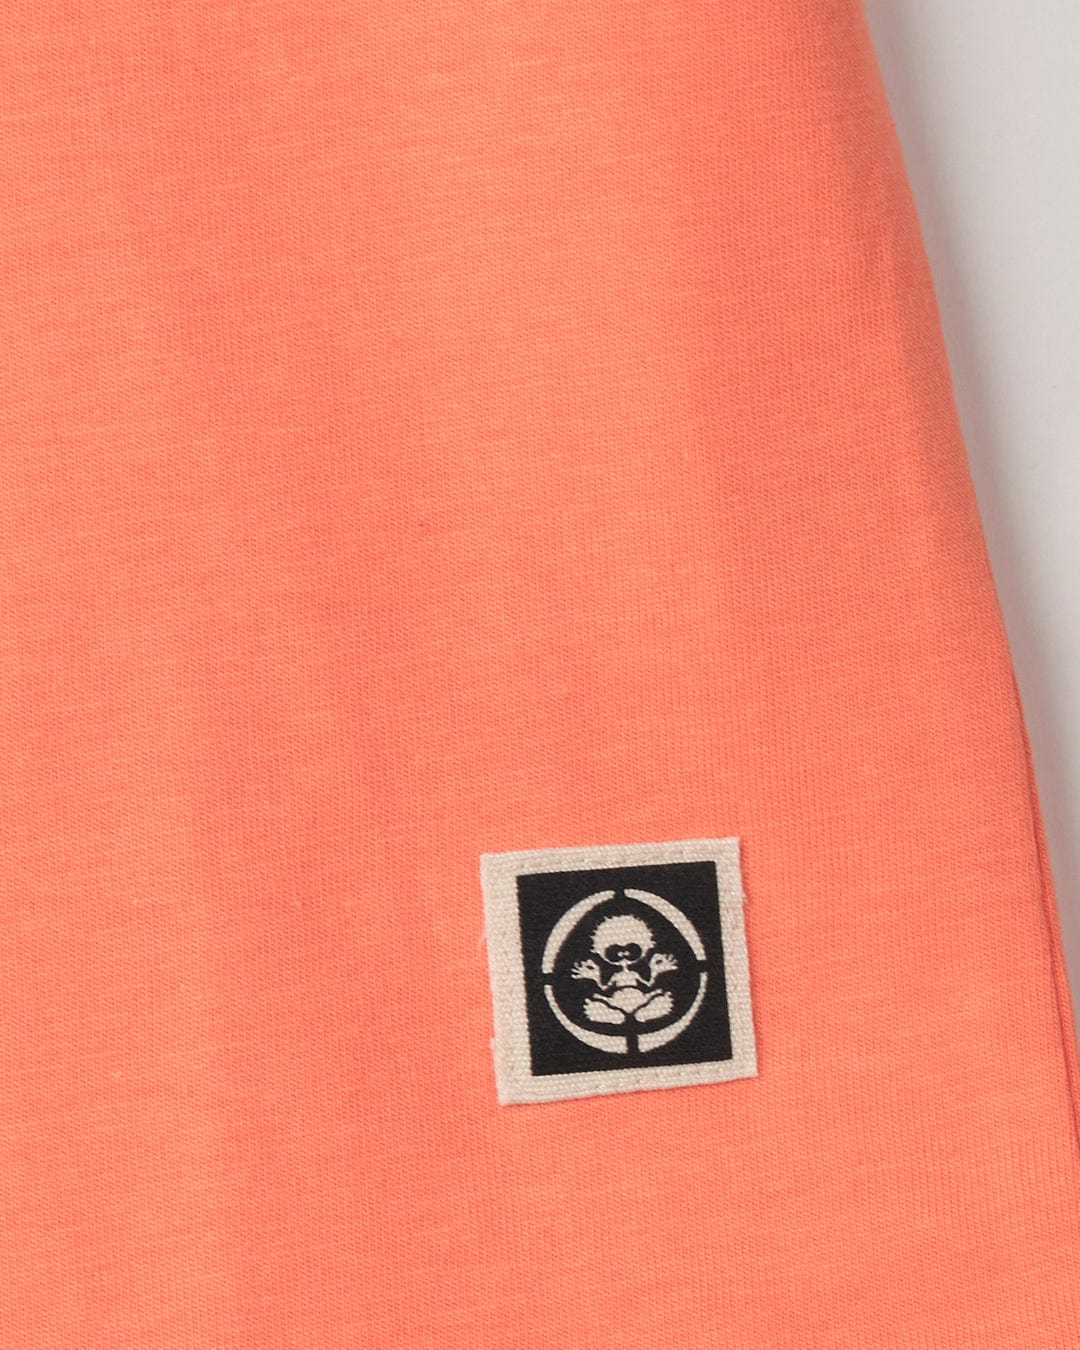 An orange Beach Signs Cornwall - Kids Short Sleeve T-Shirt with a black Saltrock branding logo on it.